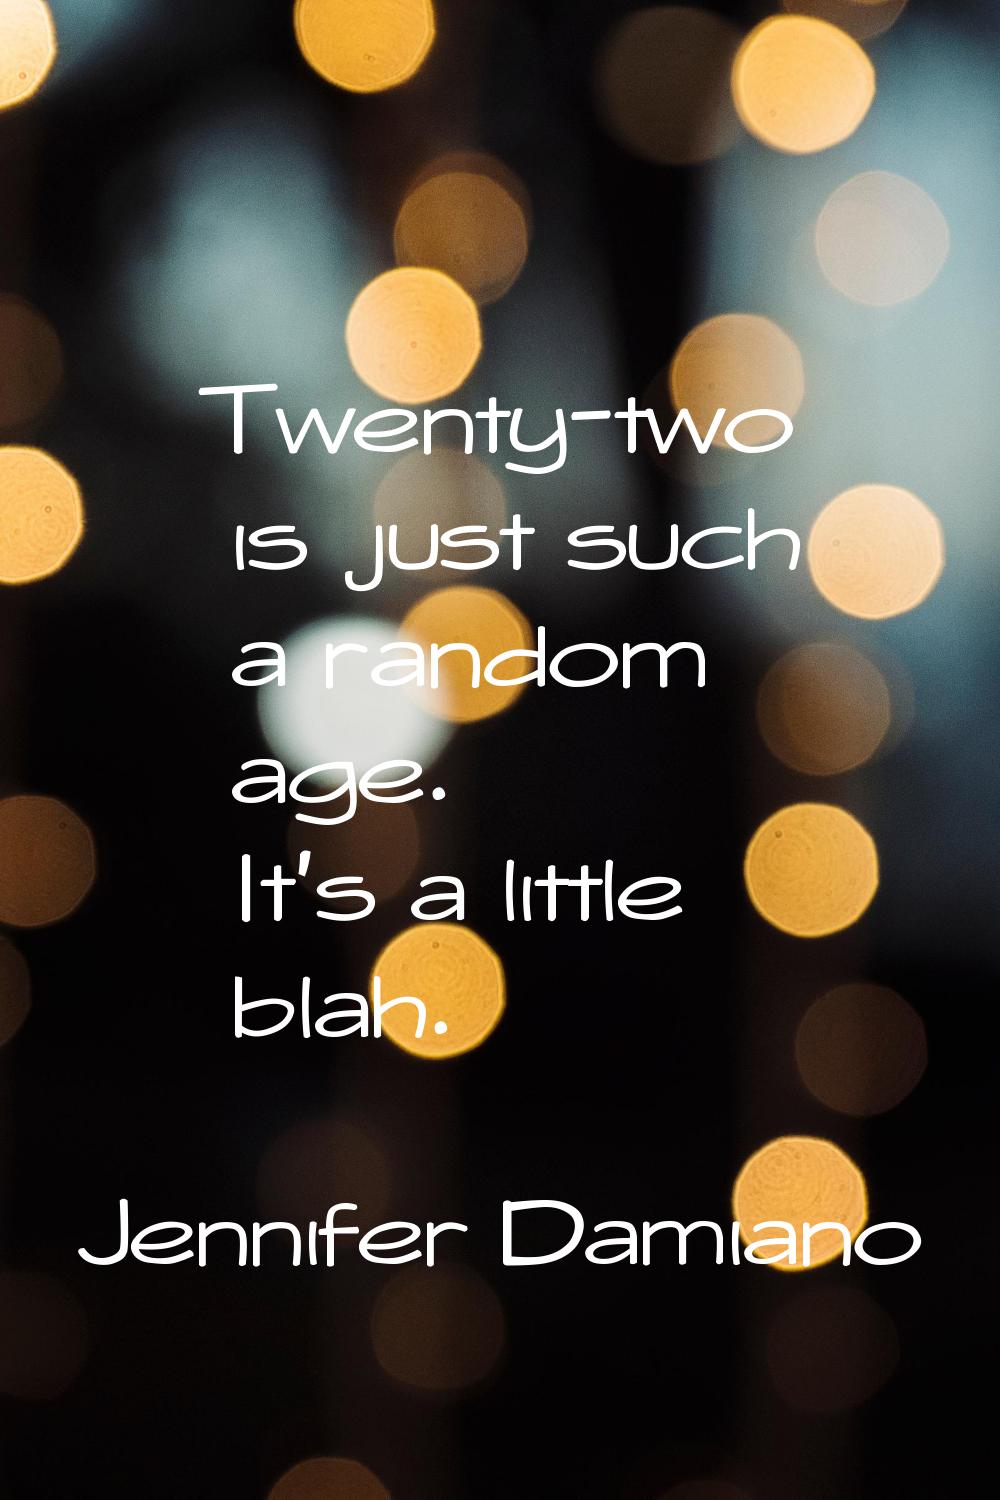 Twenty-two is just such a random age. It's a little blah.